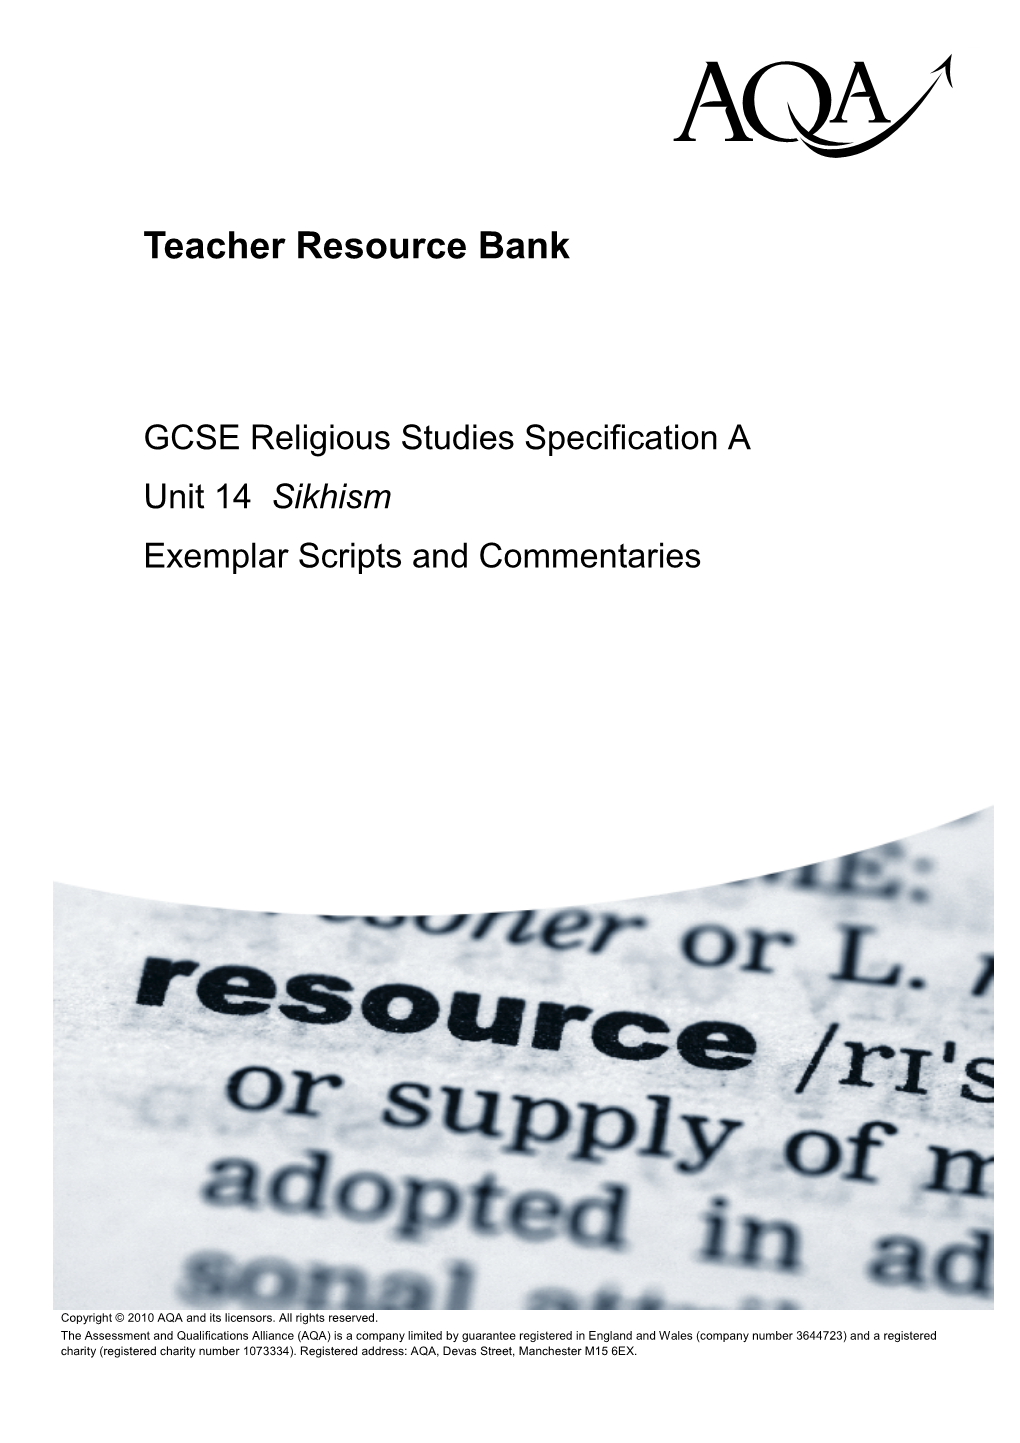 GCSE Religious Studies Specification a Unit 14 Sikhism Exemplar Scripts and Commentaries